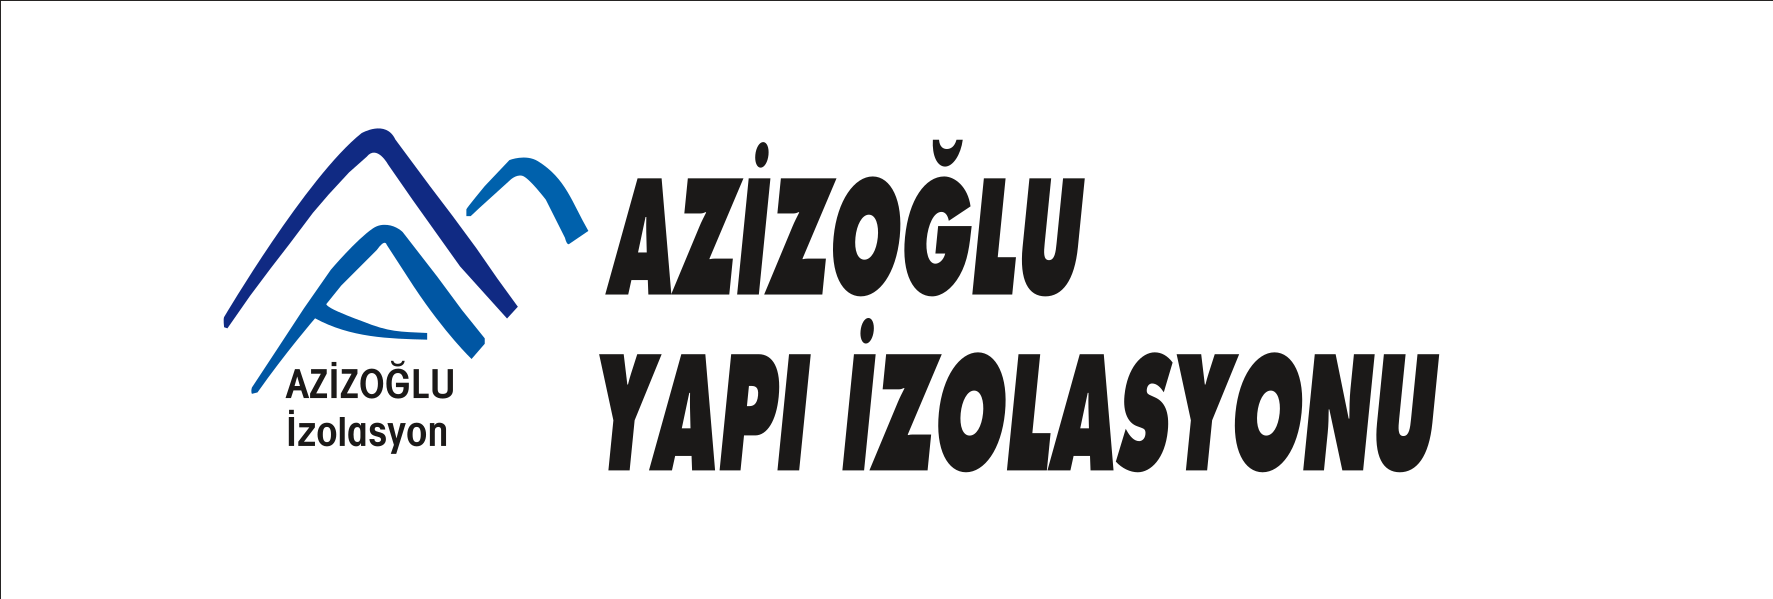 Azizoğlu Yapı İnşaat San. Tic.Ltd. Şti. Yalıtım İzolasyon- Ankara